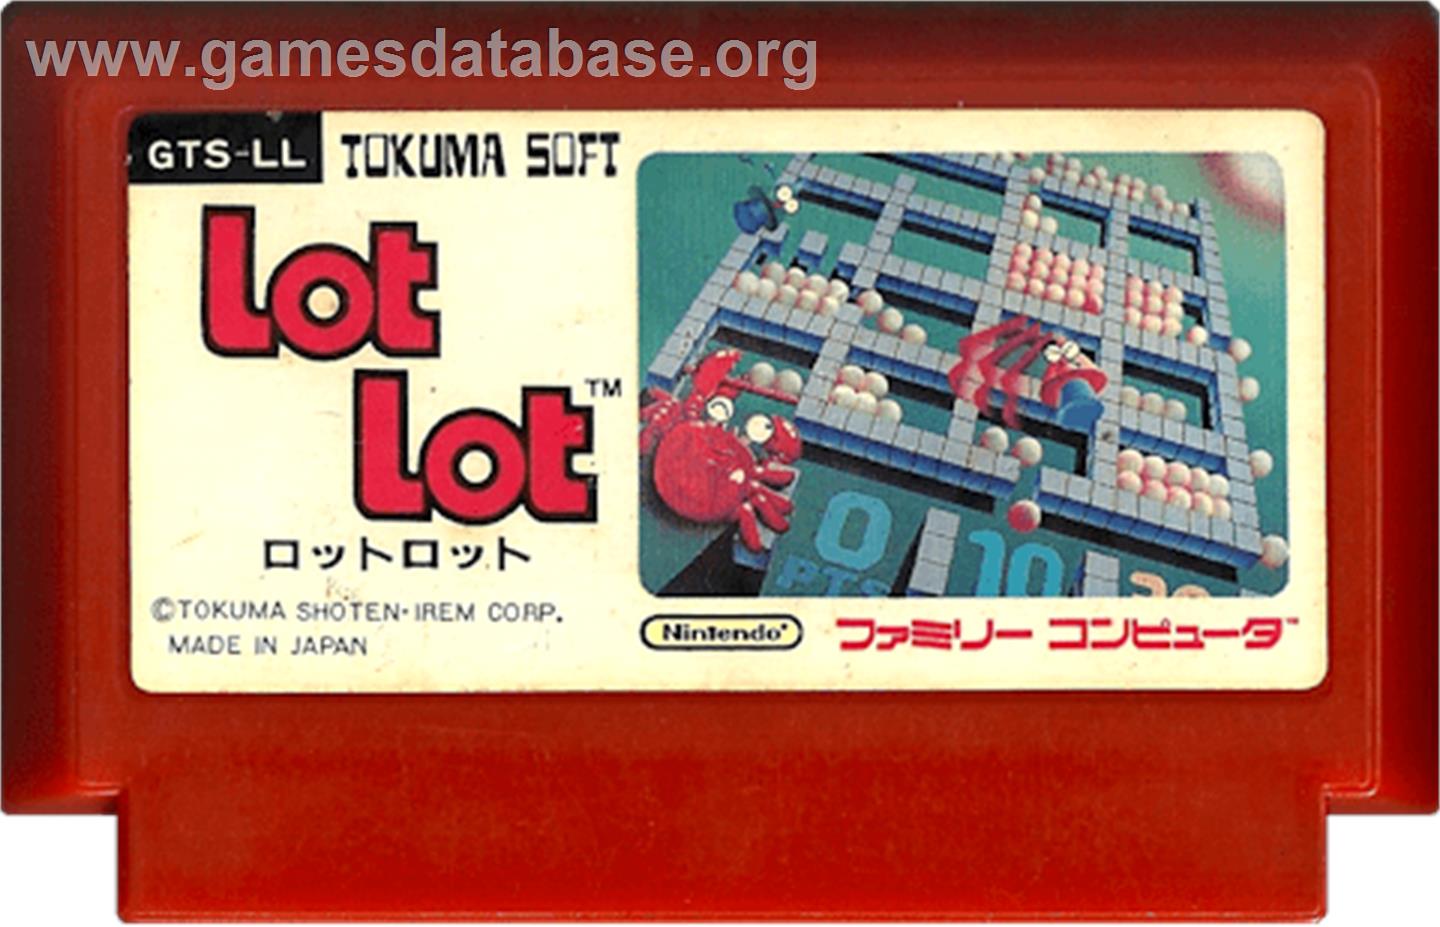 Lot Lot - Nintendo NES - Artwork - Cartridge